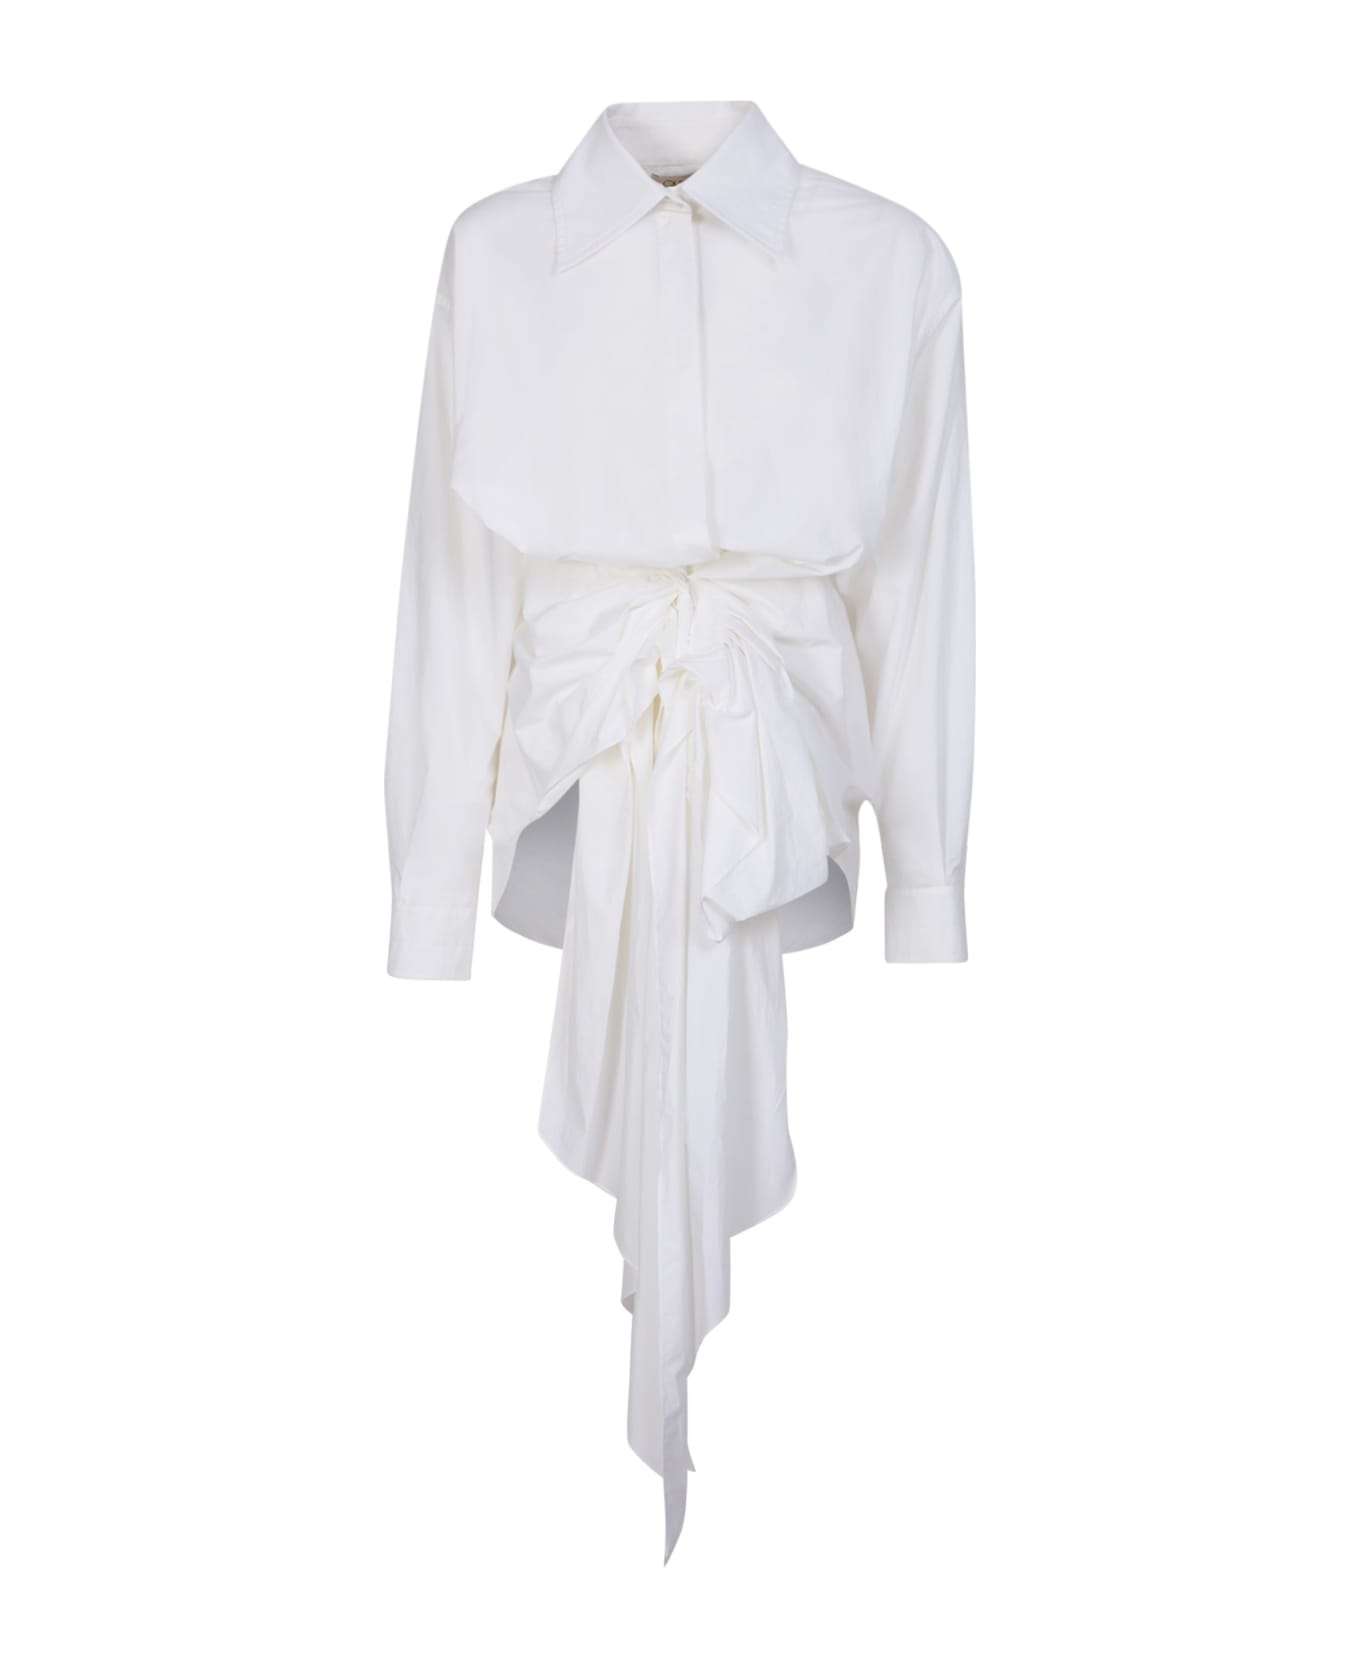 Quira White Oversize Shirt - White